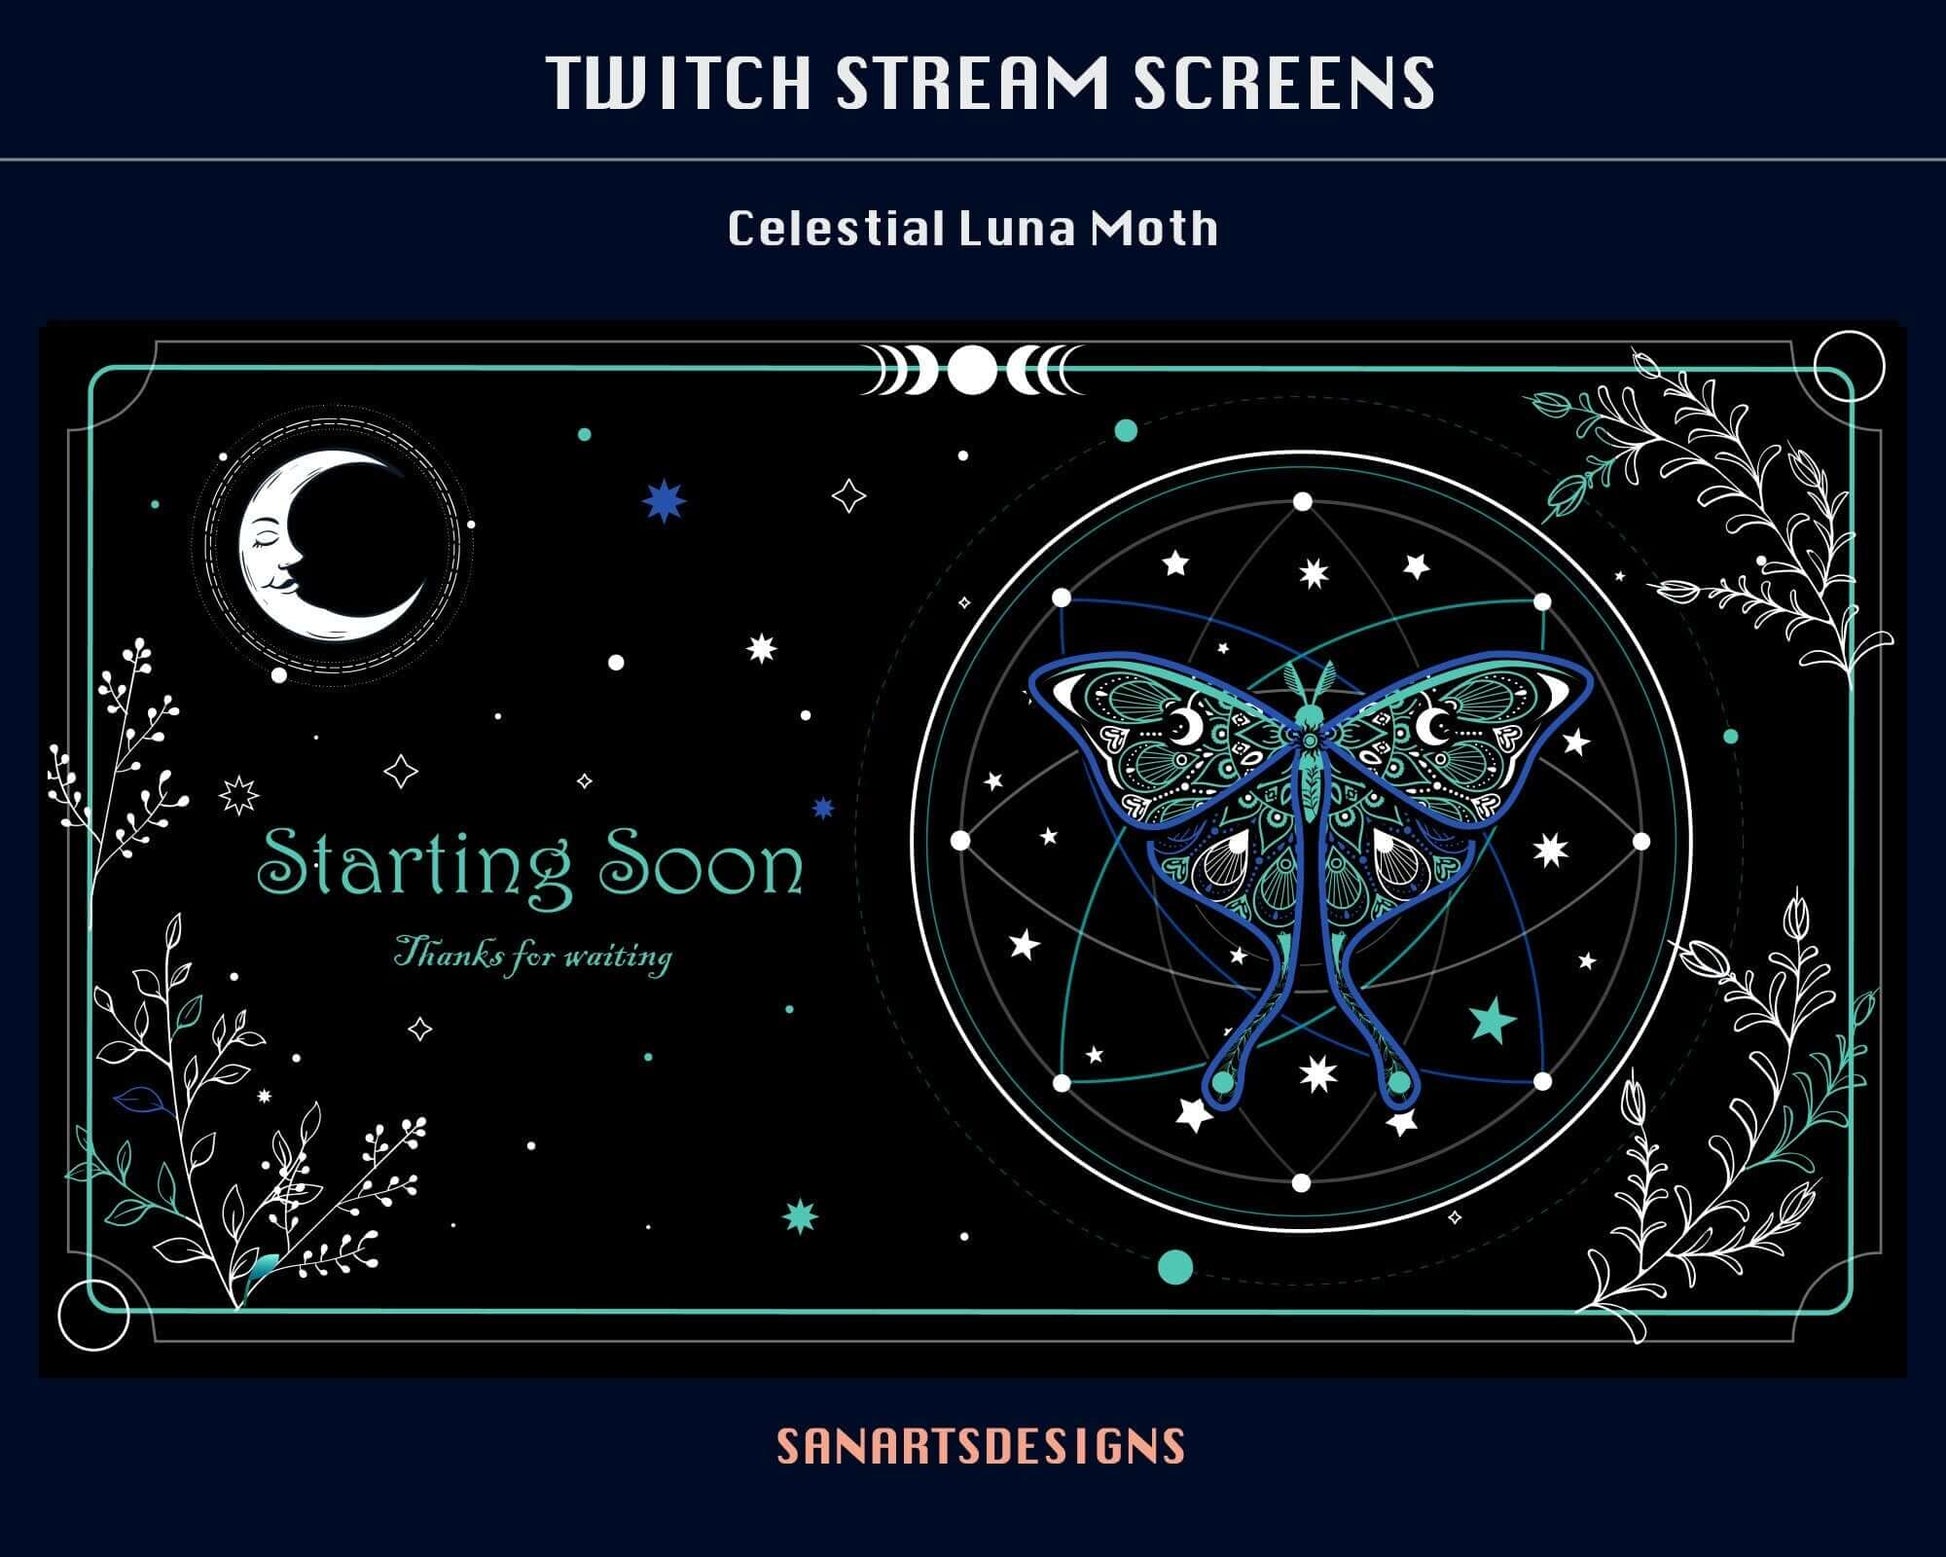 Animated Scenes Celestial Luna Moth - Overlay - Stream K-Arts